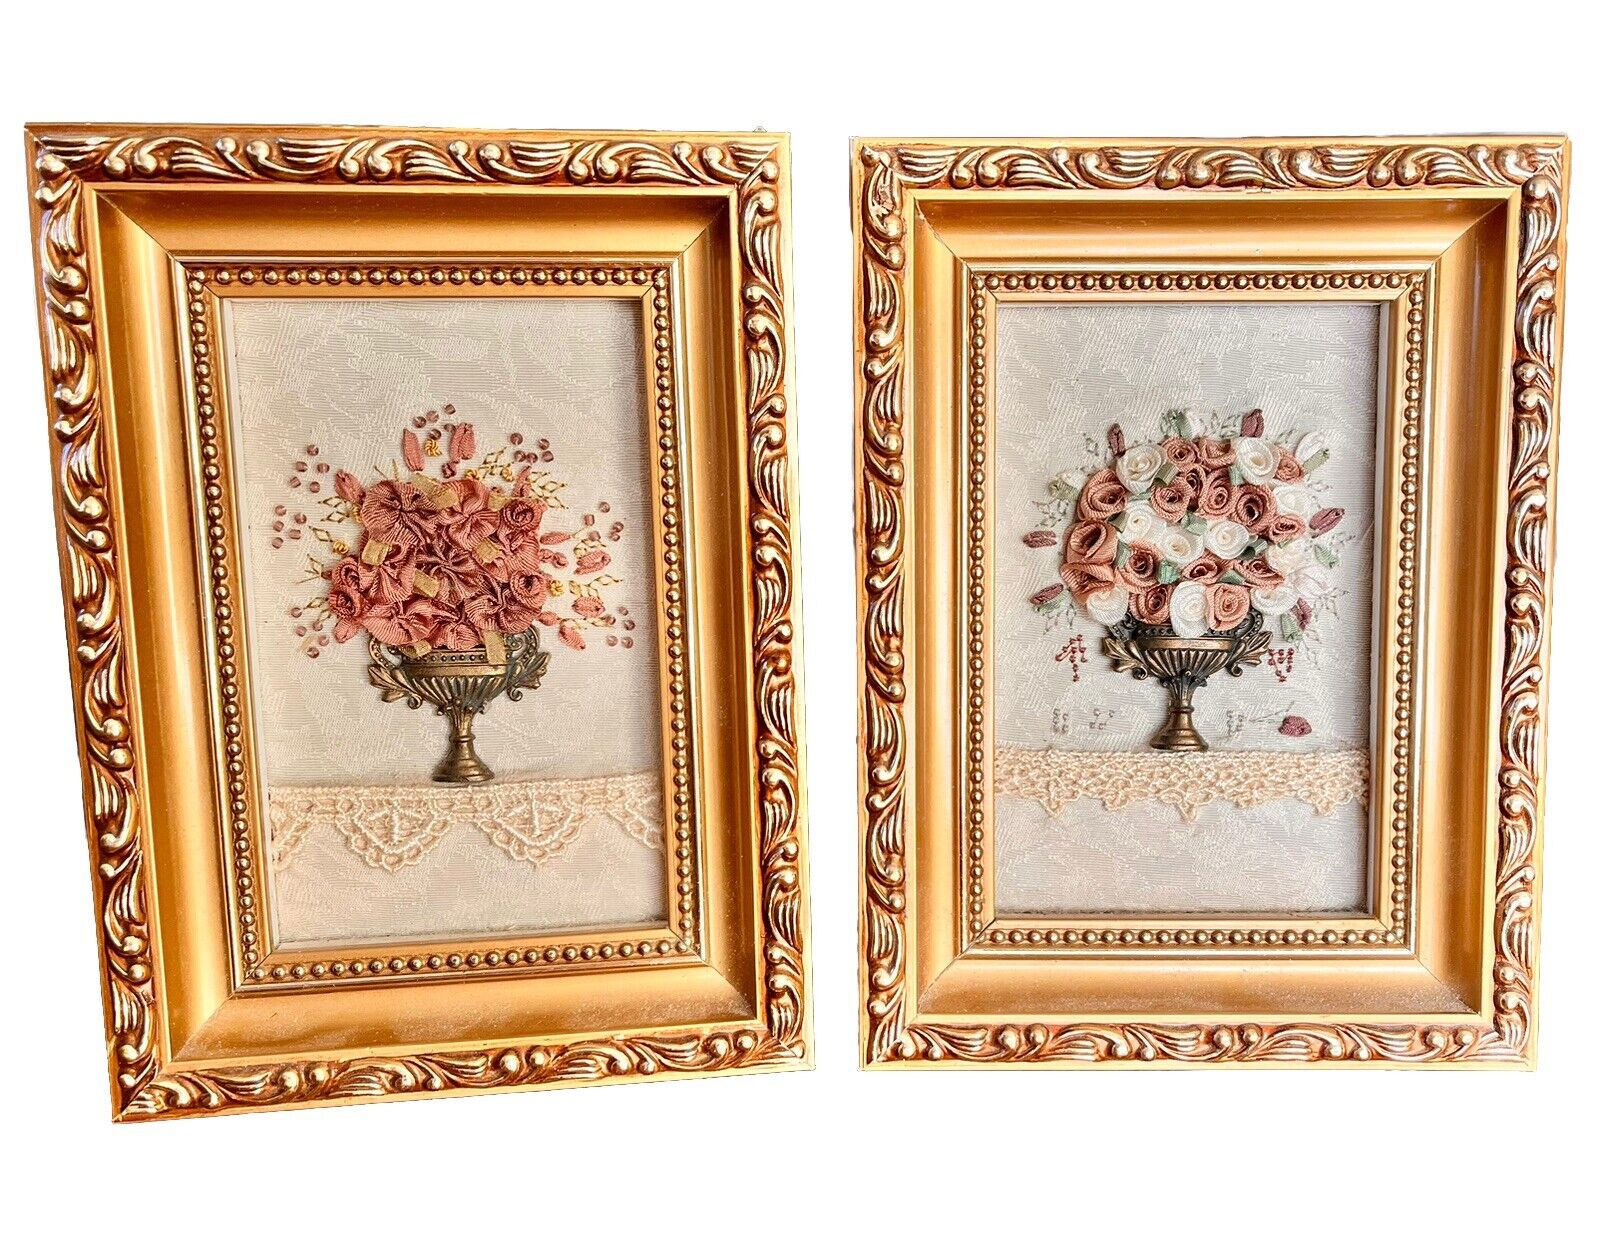 VTG Ornate Gold Framed Ribbon Bouquet Pictures Lot Cottage Grandma-Core 5.5X7.5”